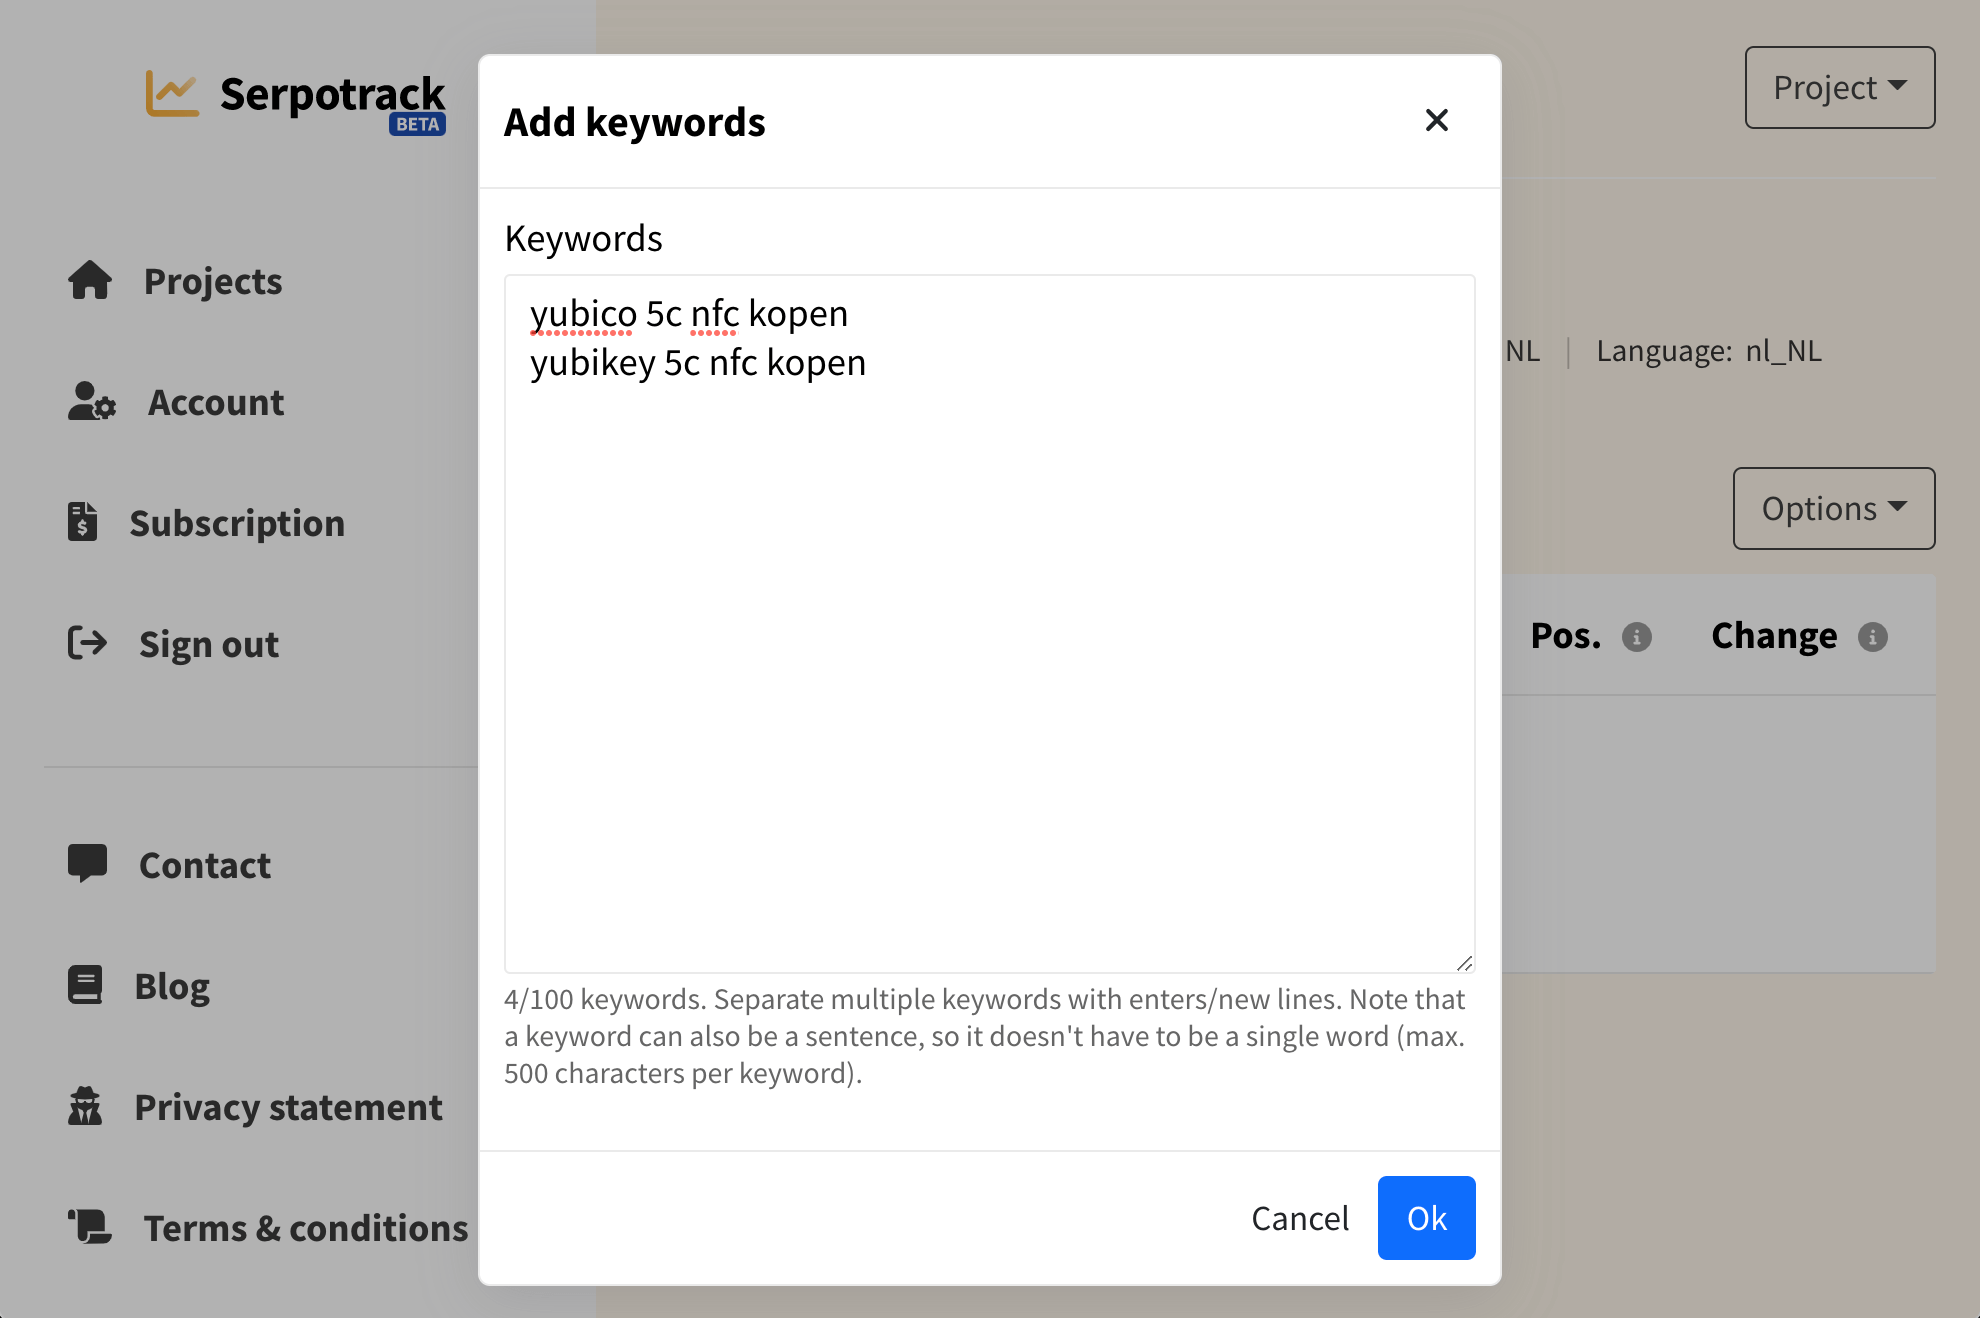 Adding keywords to track in batch